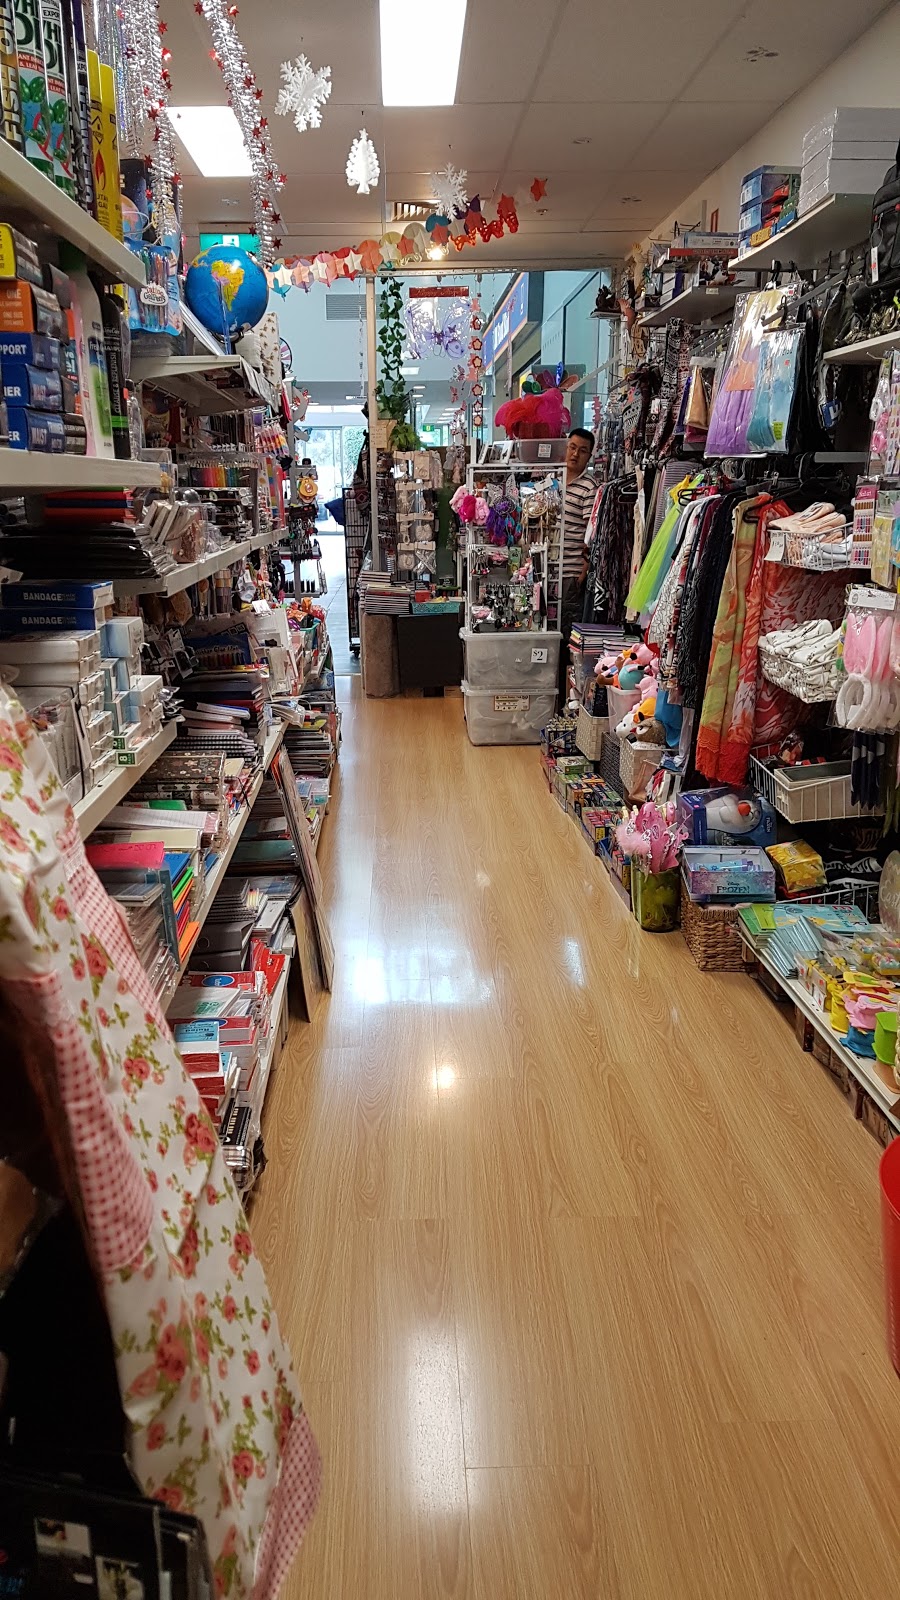 Payless Variety Store | home goods store | Kilsyth VIC 3137, Australia